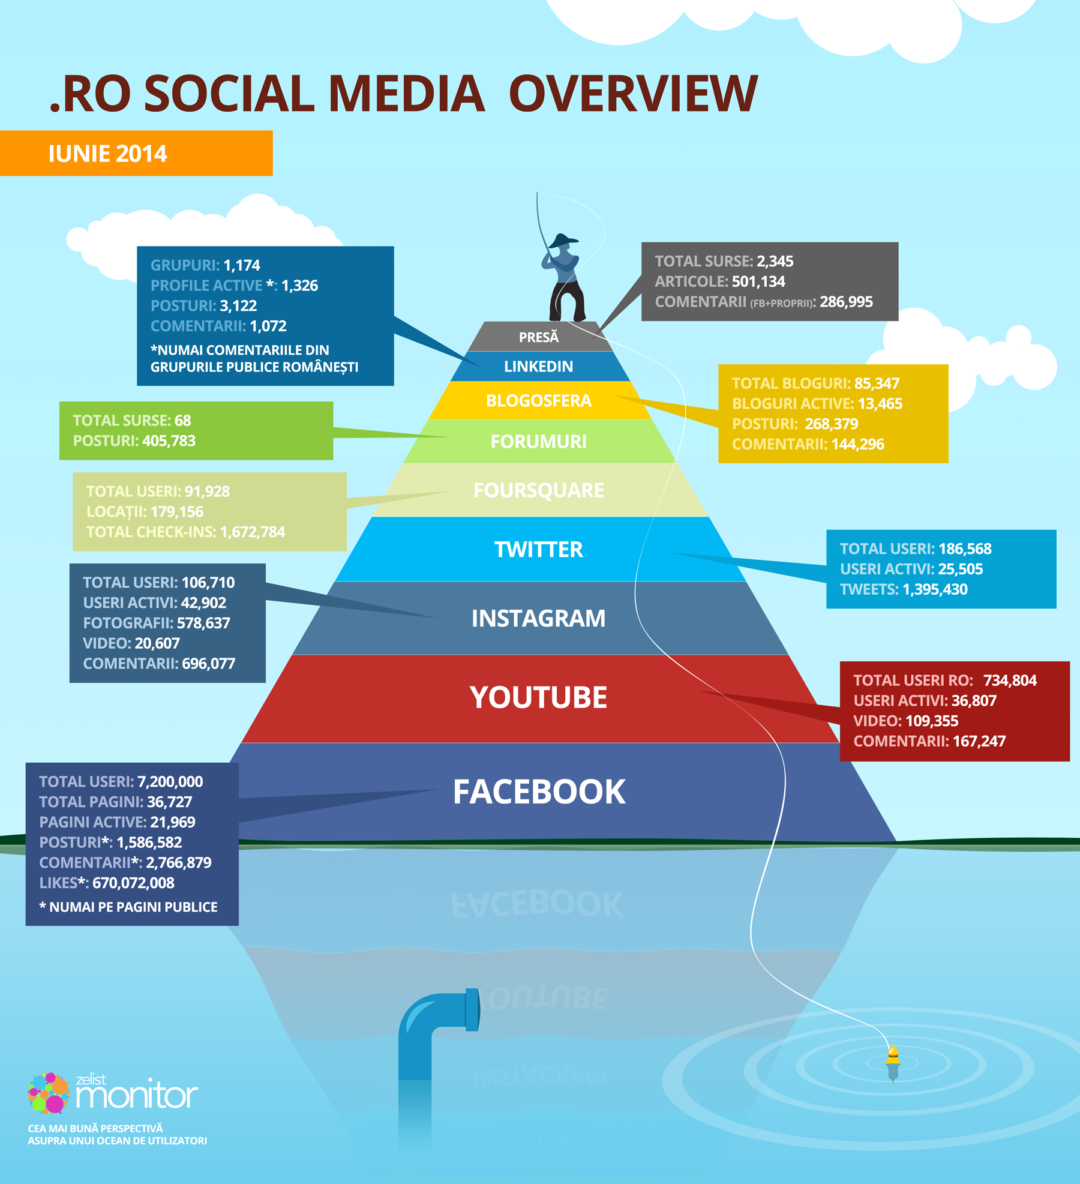 Romanian social media overview for June 2014